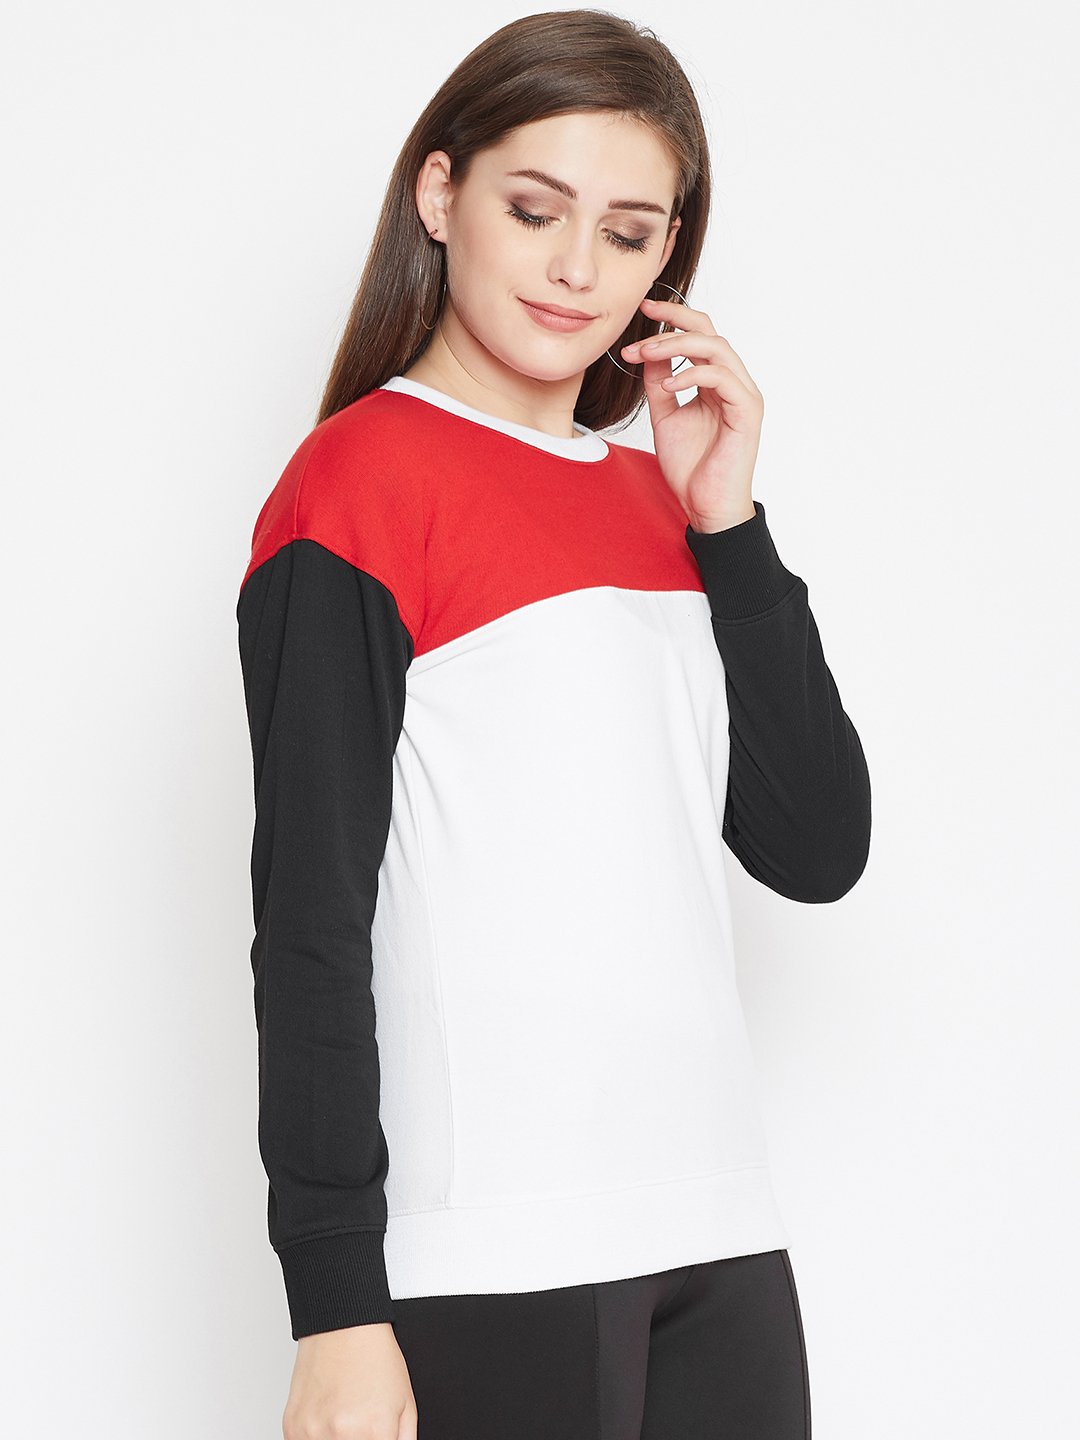 Women's White Colorblocked Long Sleeves Round Neck Sweatshirt